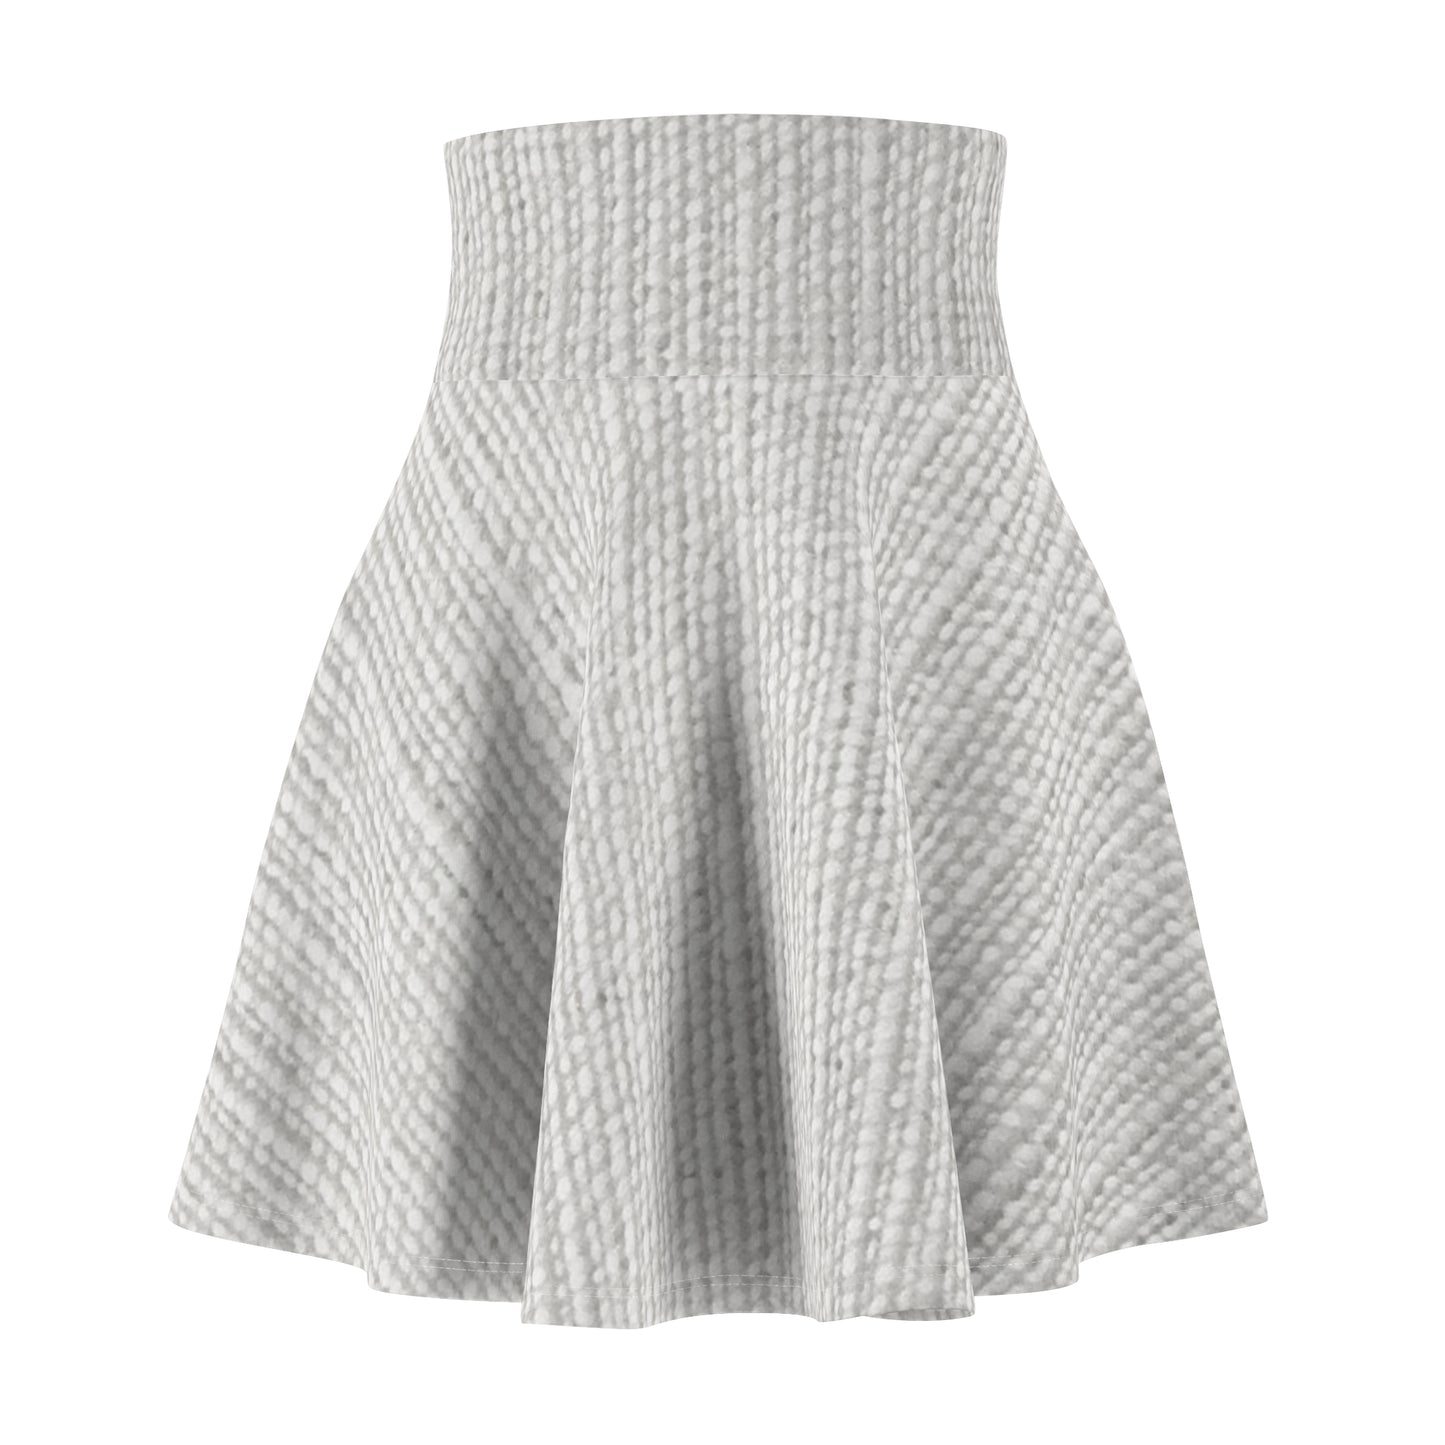 Chic White Denim-Style Fabric, Luxurious & Stylish Material - Women's Skater Skirt (AOP)